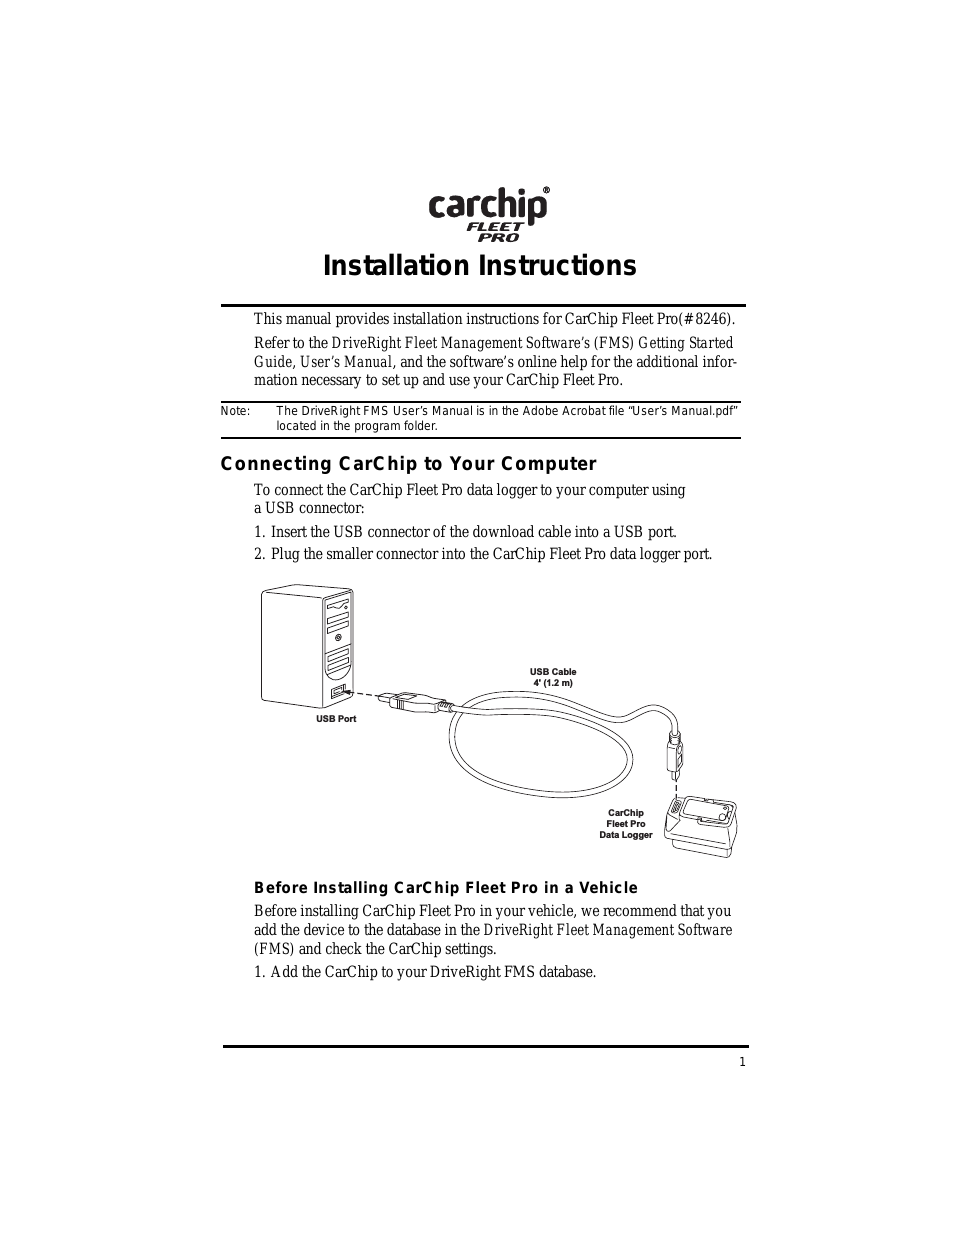 CarChip Fleet Pro Instruction Manual (8246)